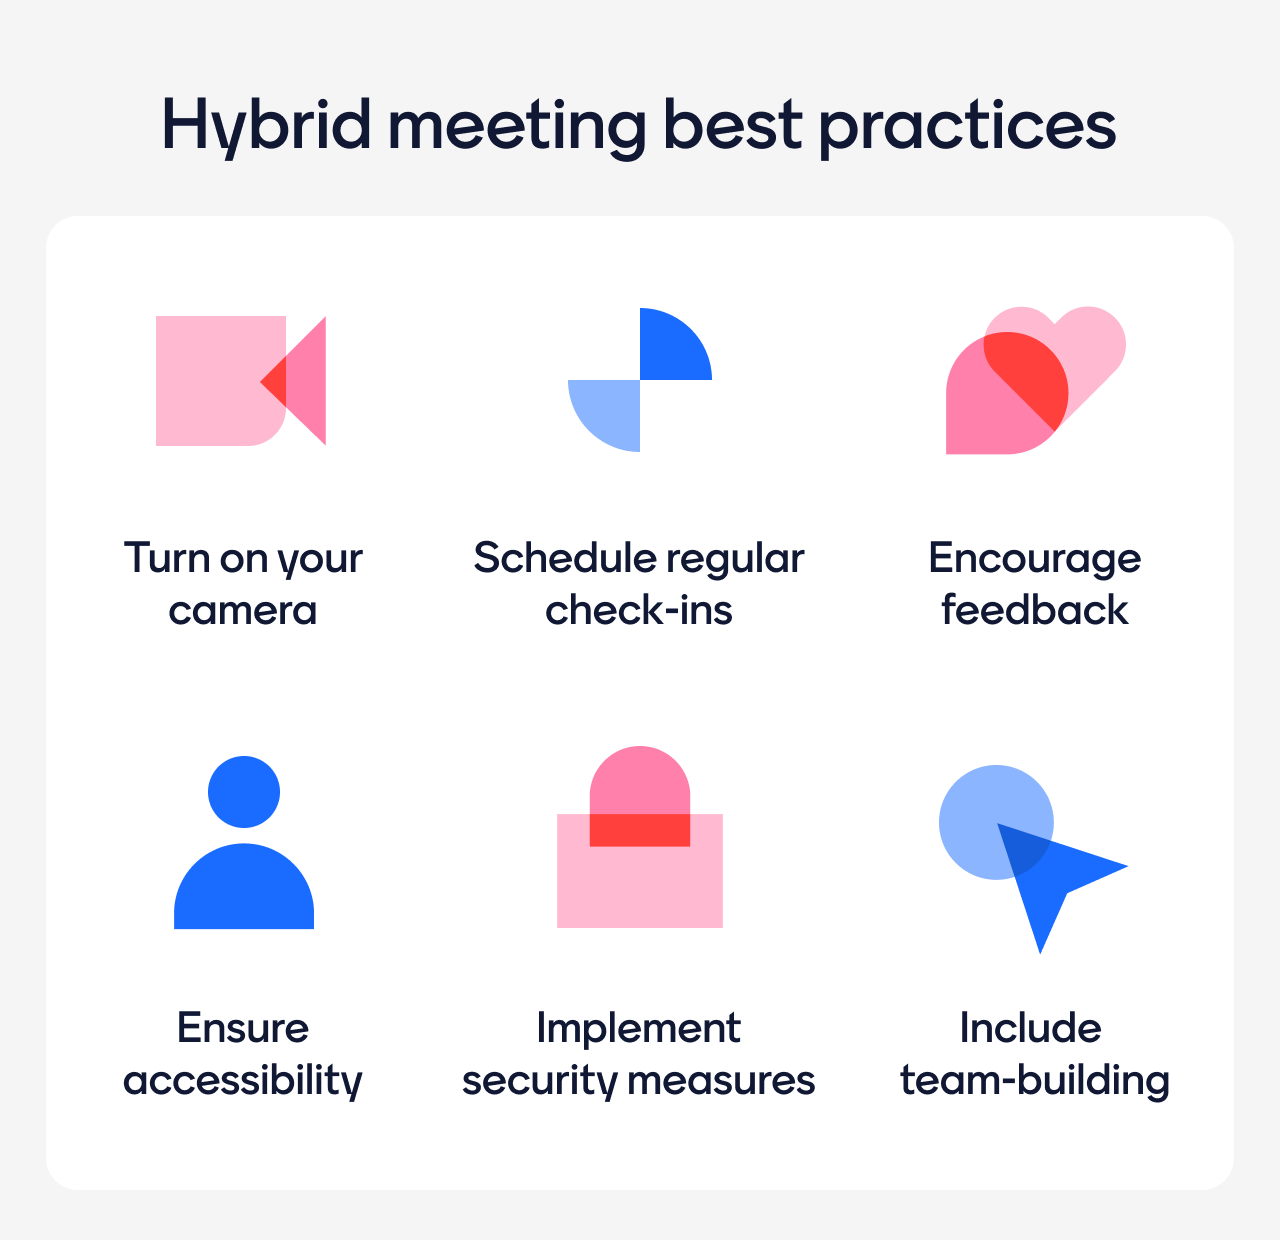 Hybrid meeting best practices